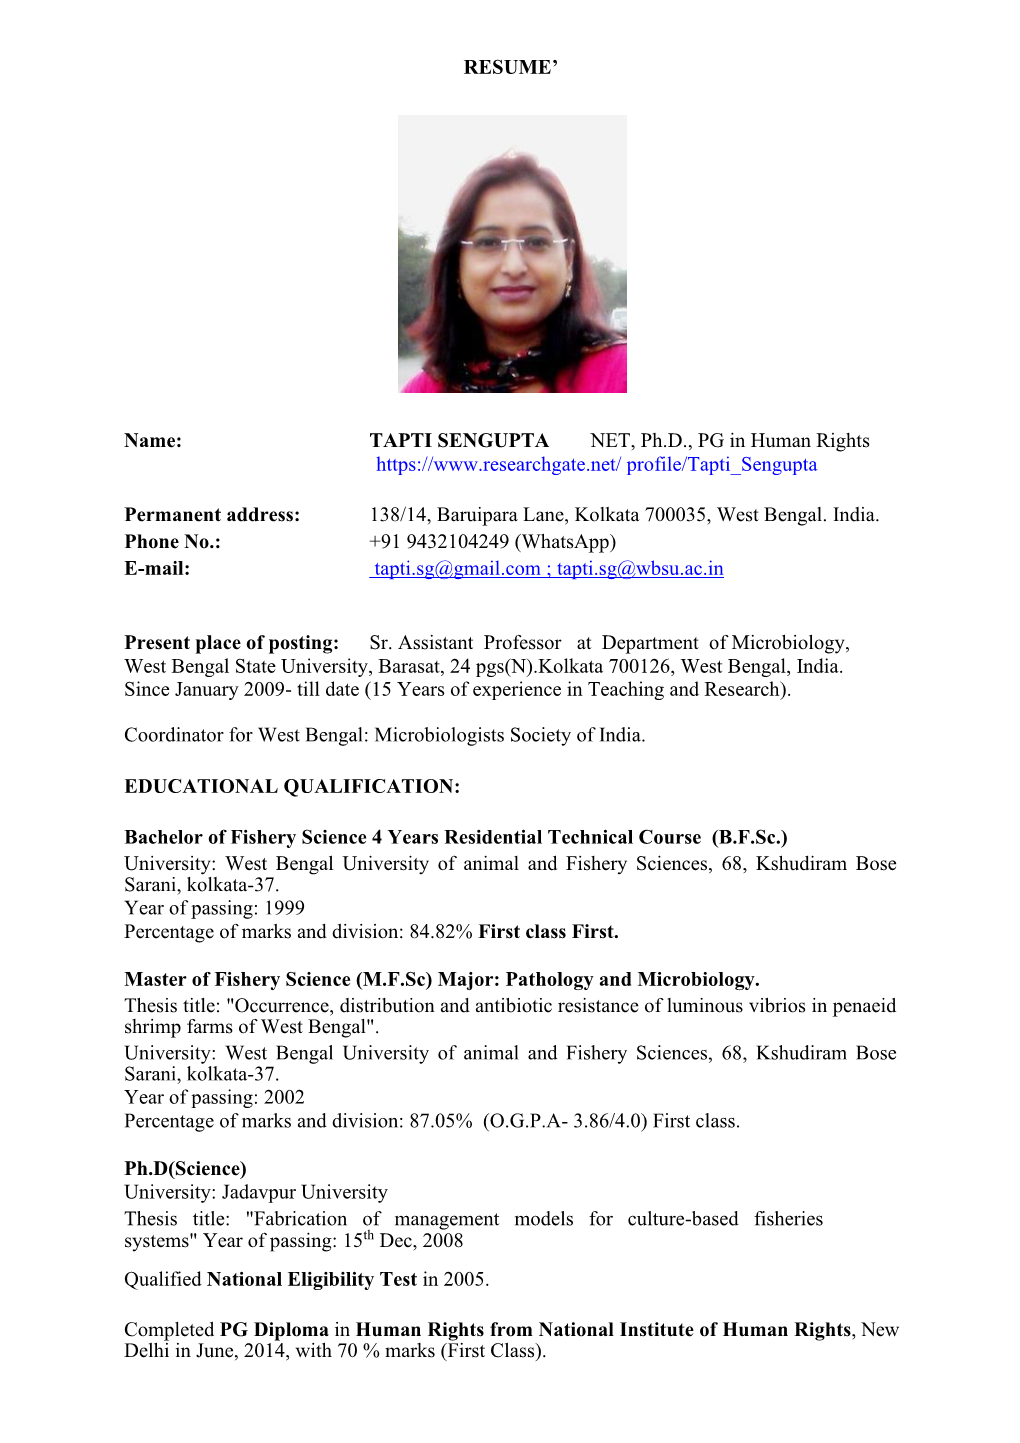 TAPTI SENGUPTA NET, Ph.D., PG in Human Rights Profile/Tapti Sengupta